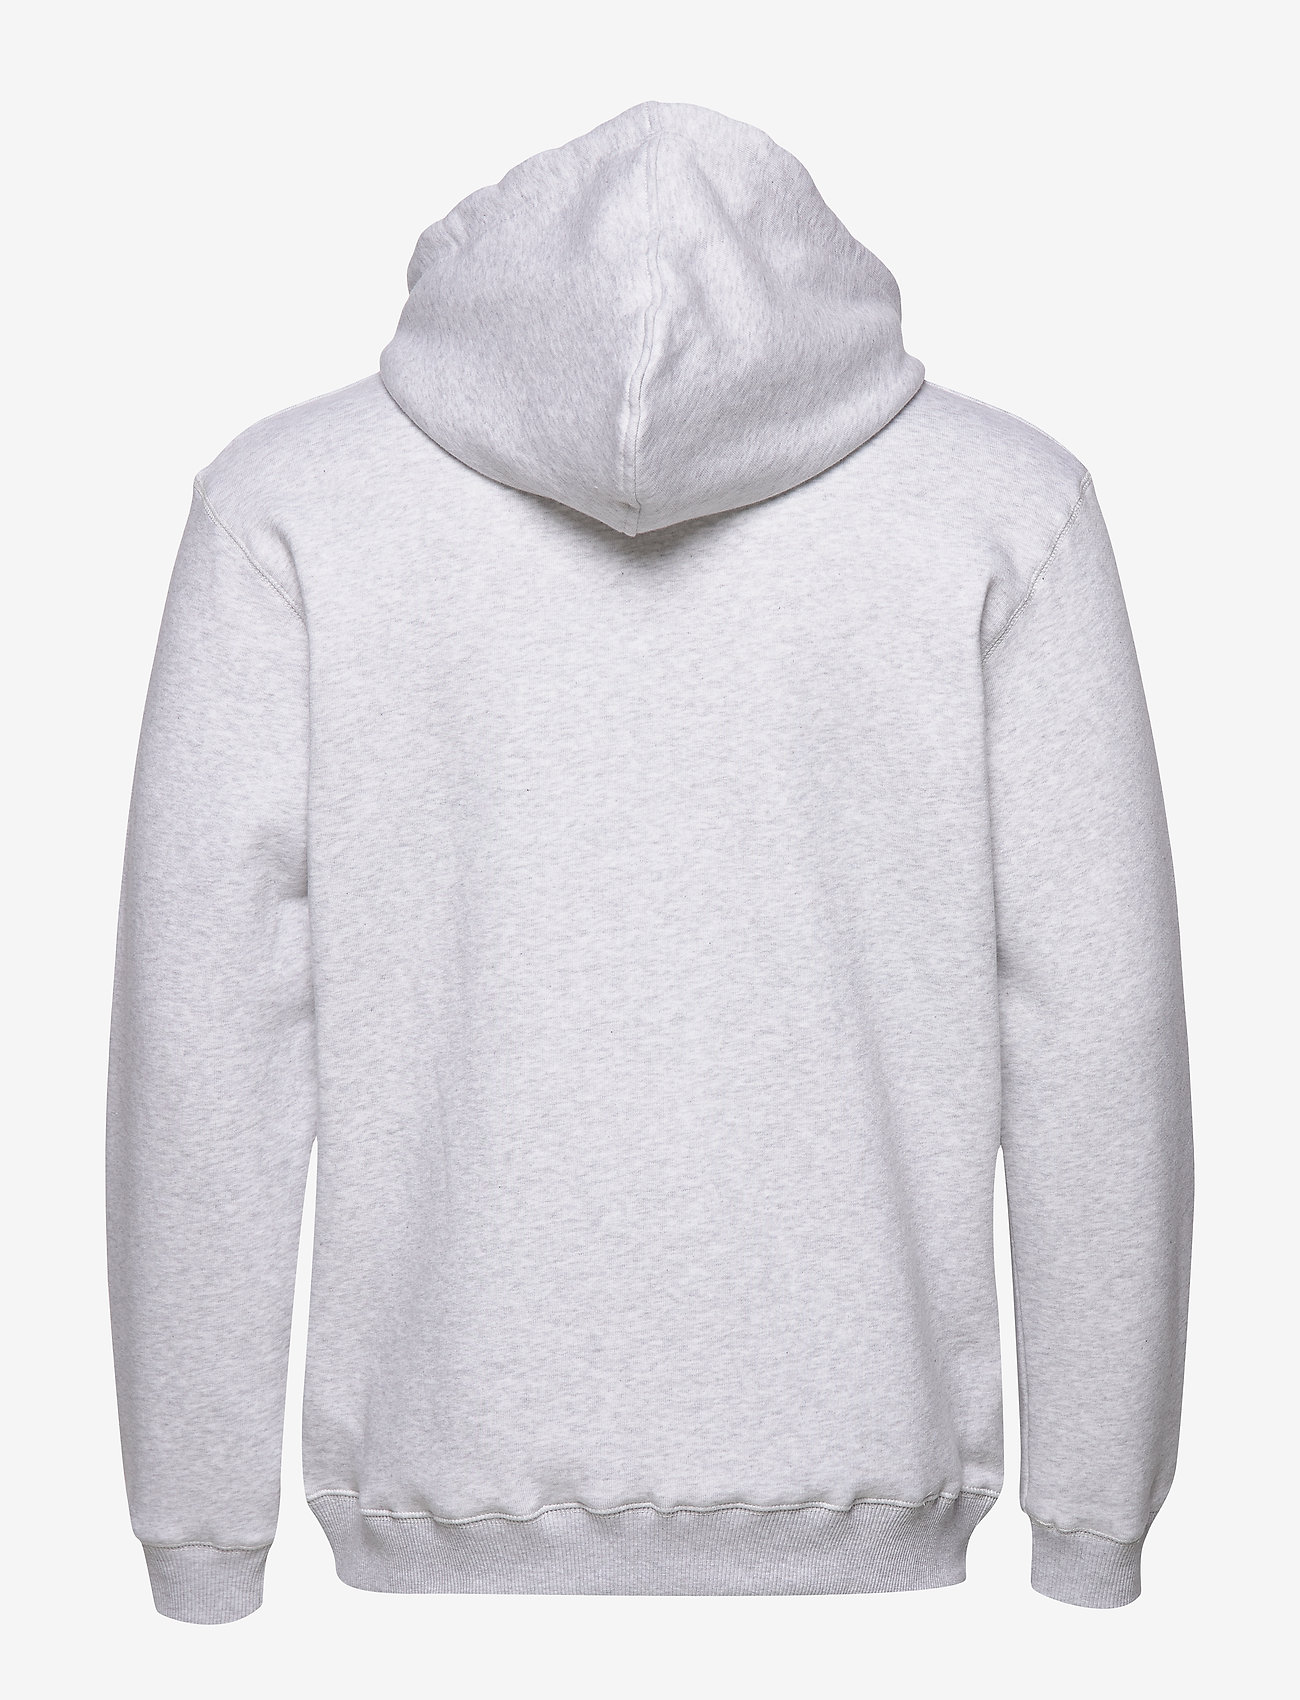 Makia - Brand Hooded Sweatshirt - truien en hoodies - light grey - 1